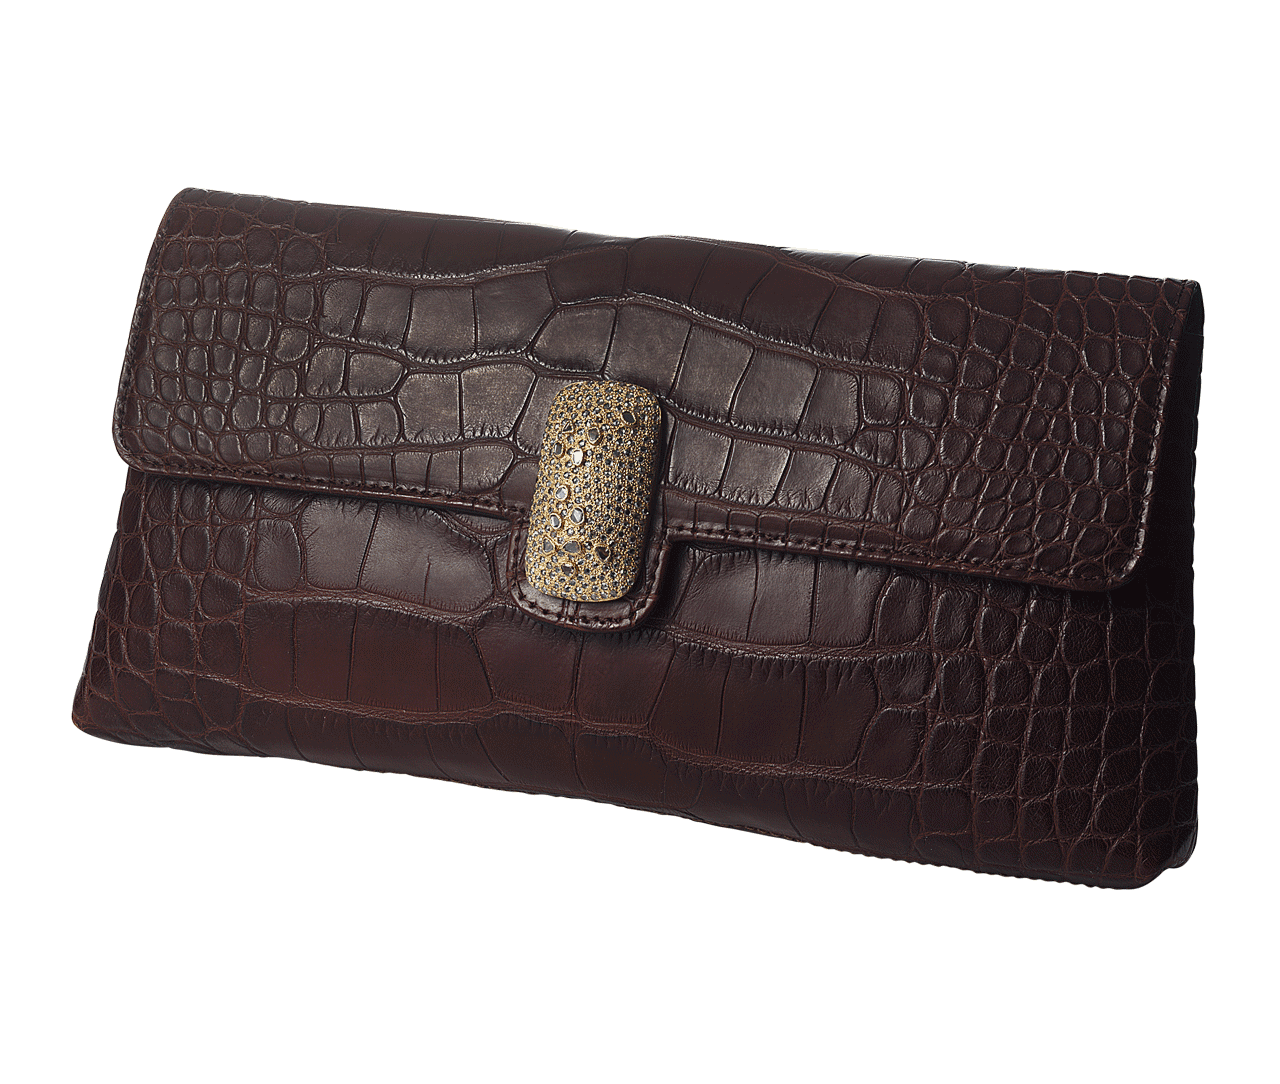 Antiquity Galano Brown Matte Alligator Leather Handbag - Coomi